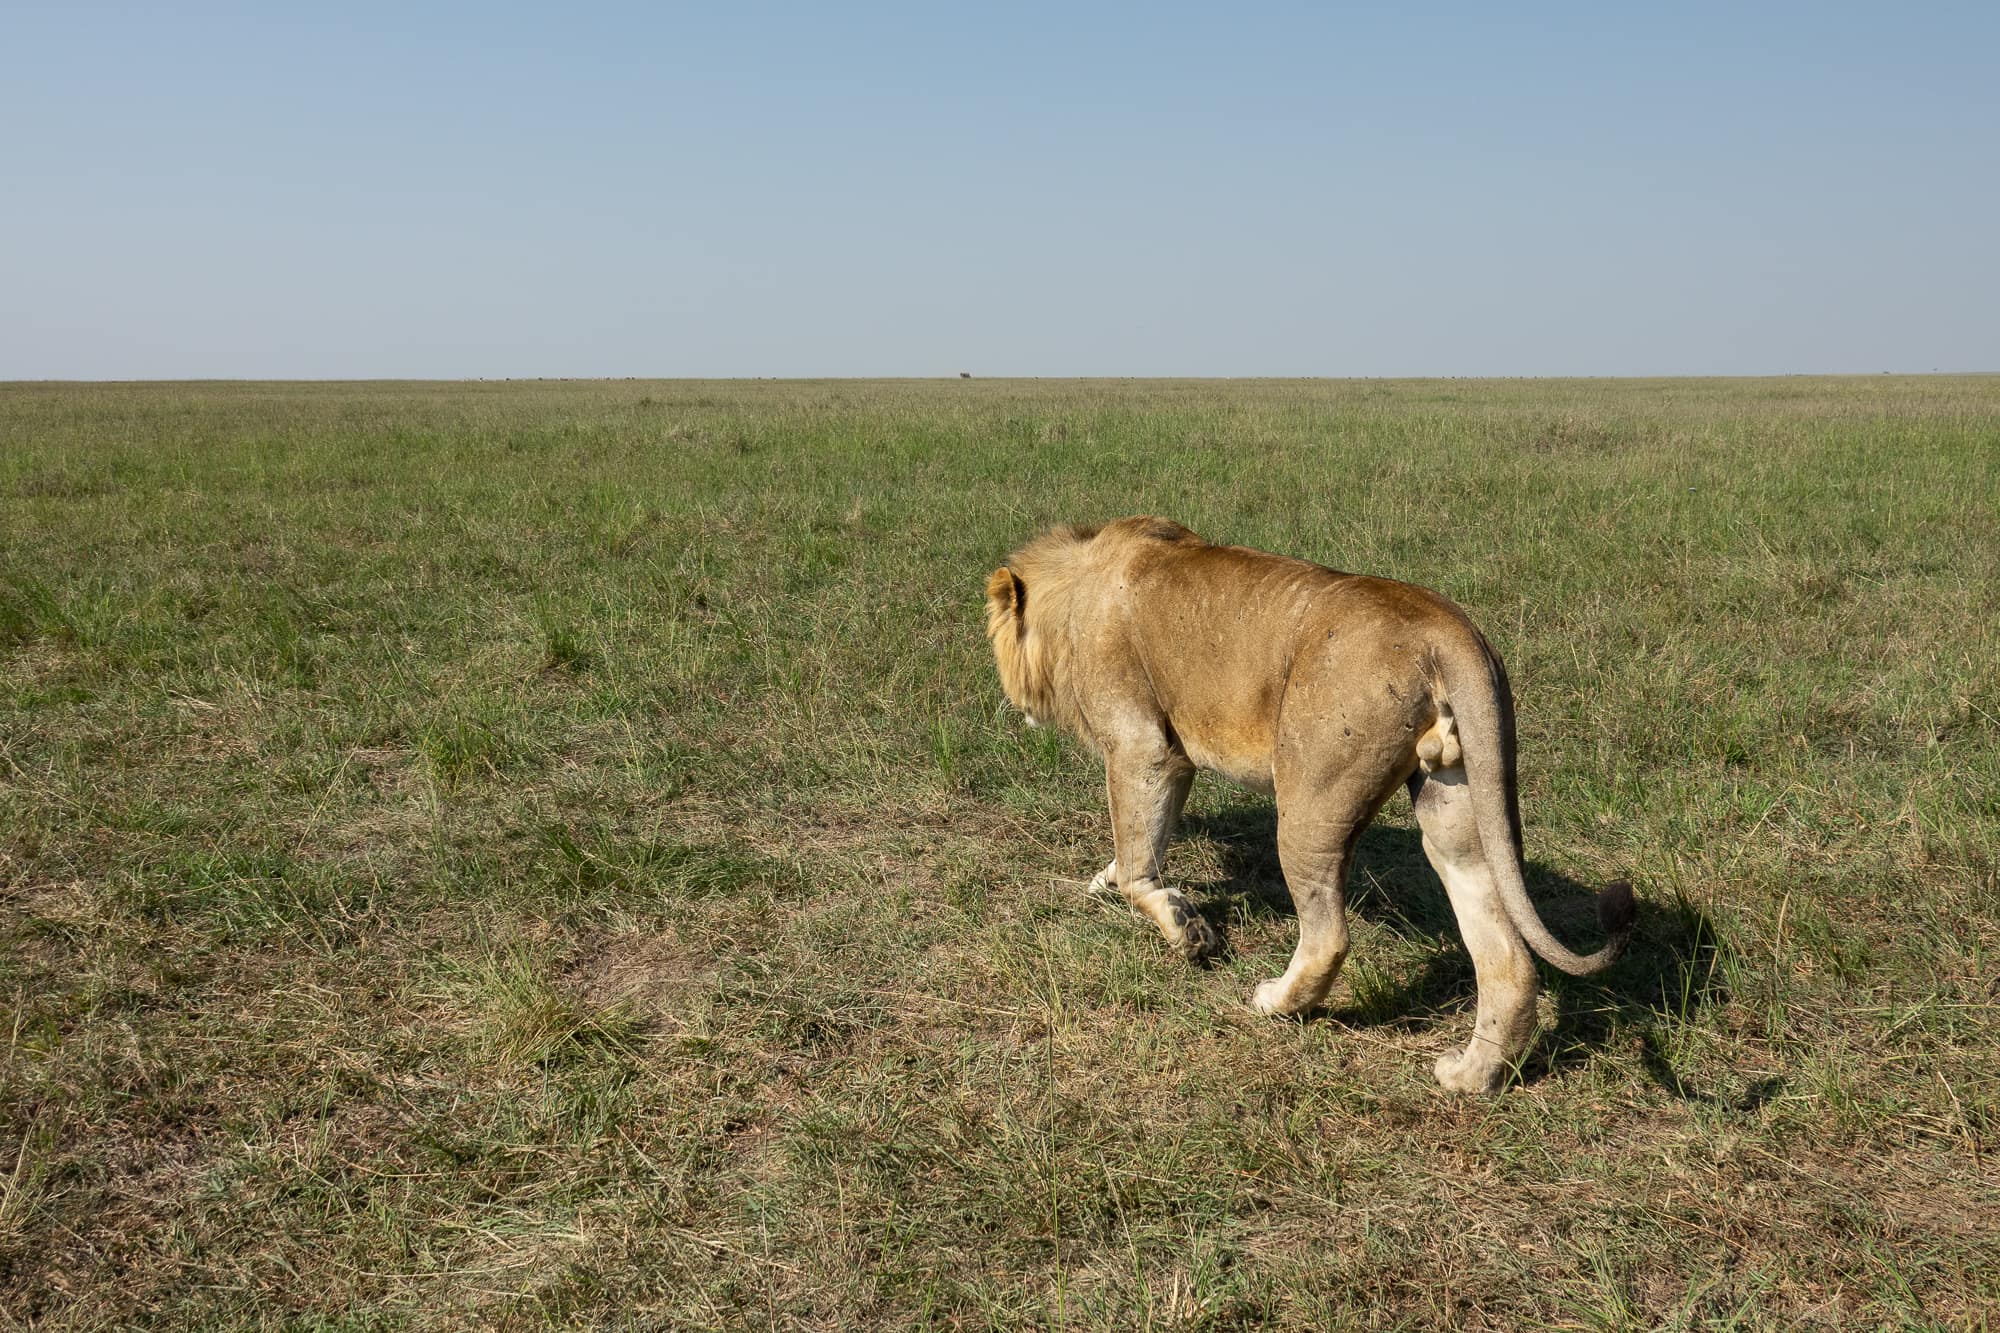 One big lion walking away. Got very close to our safari car